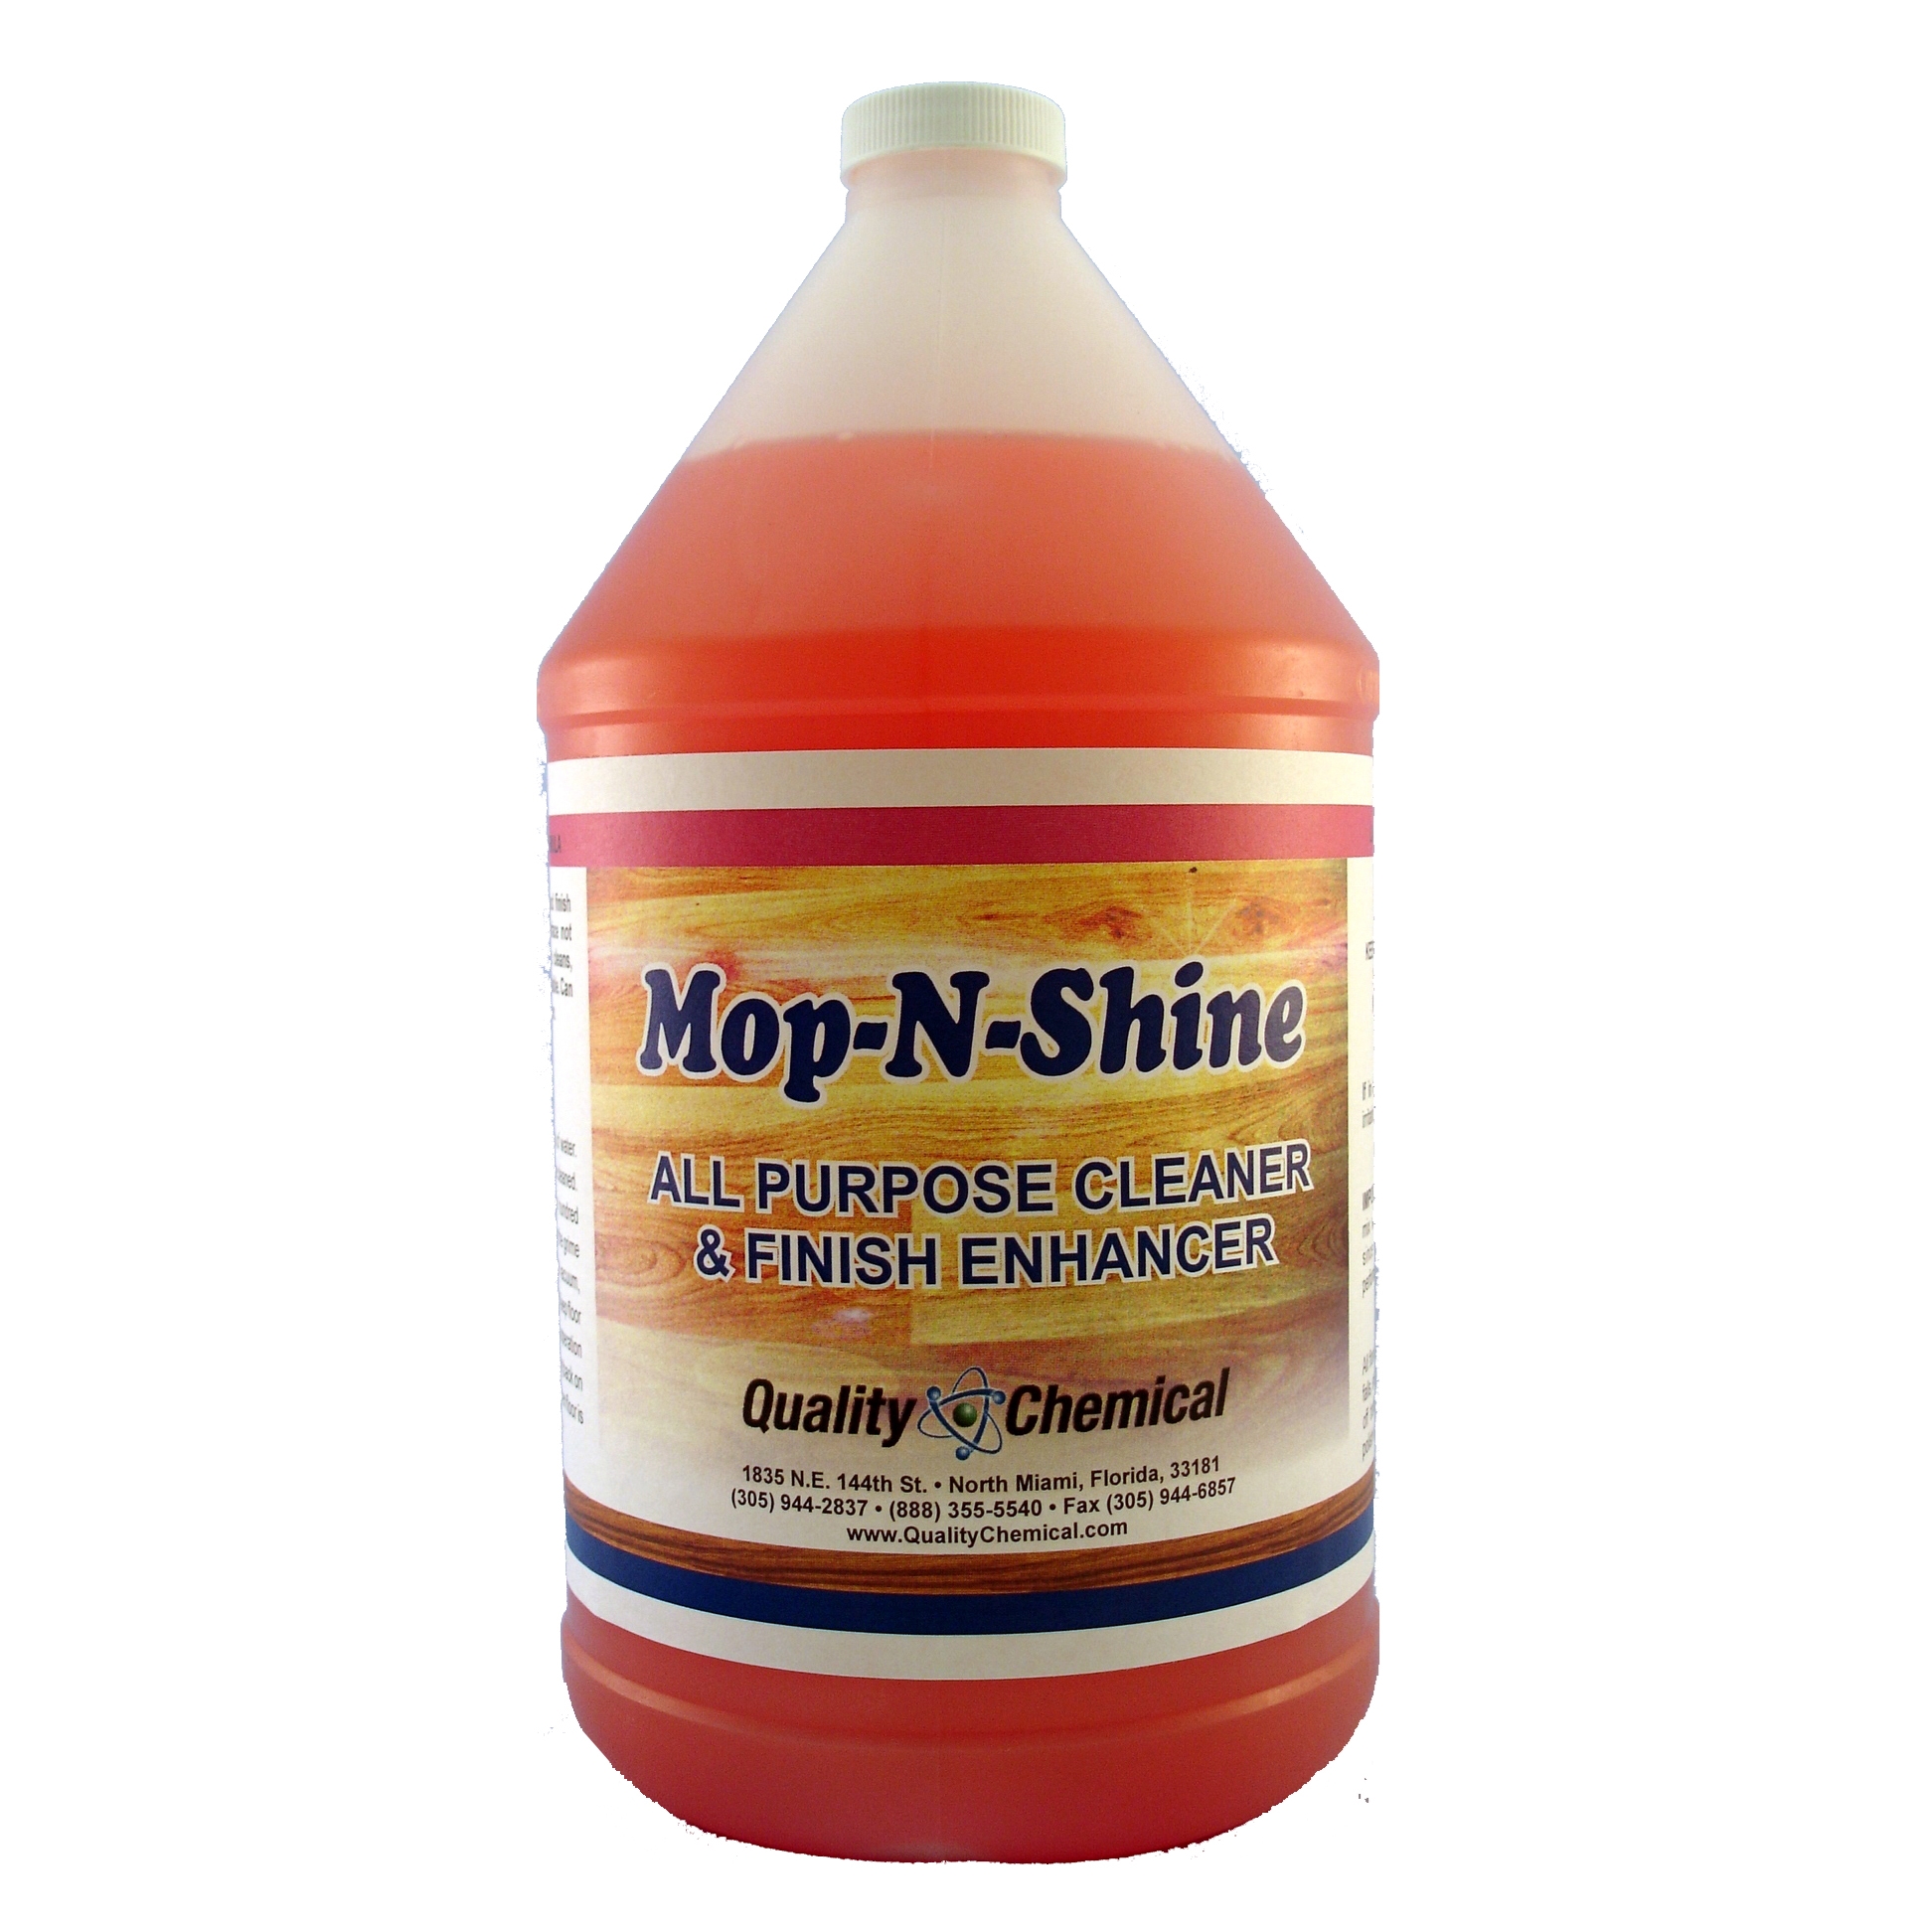 Mop-N-Shine